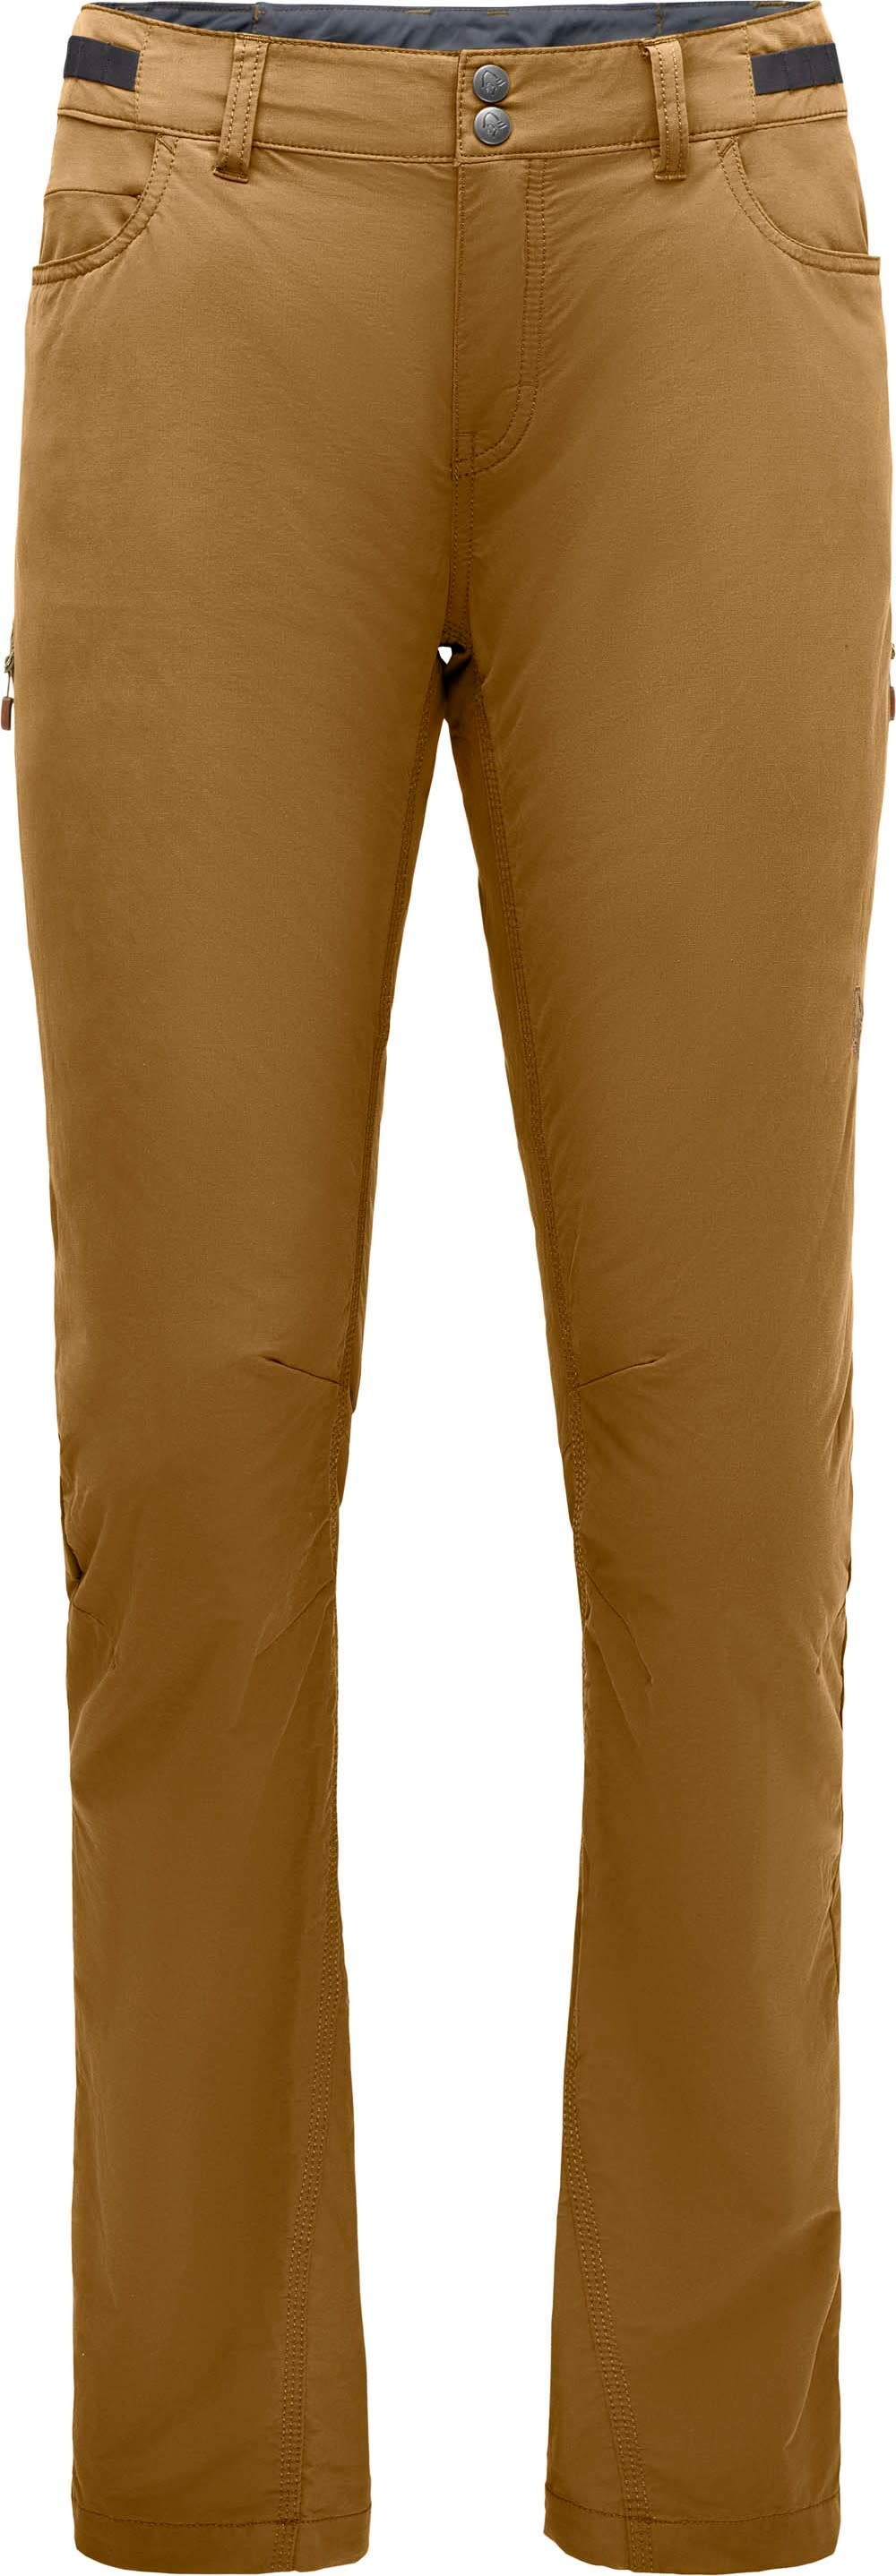 Women's Svalbard Light Cotton Pants Camelflage